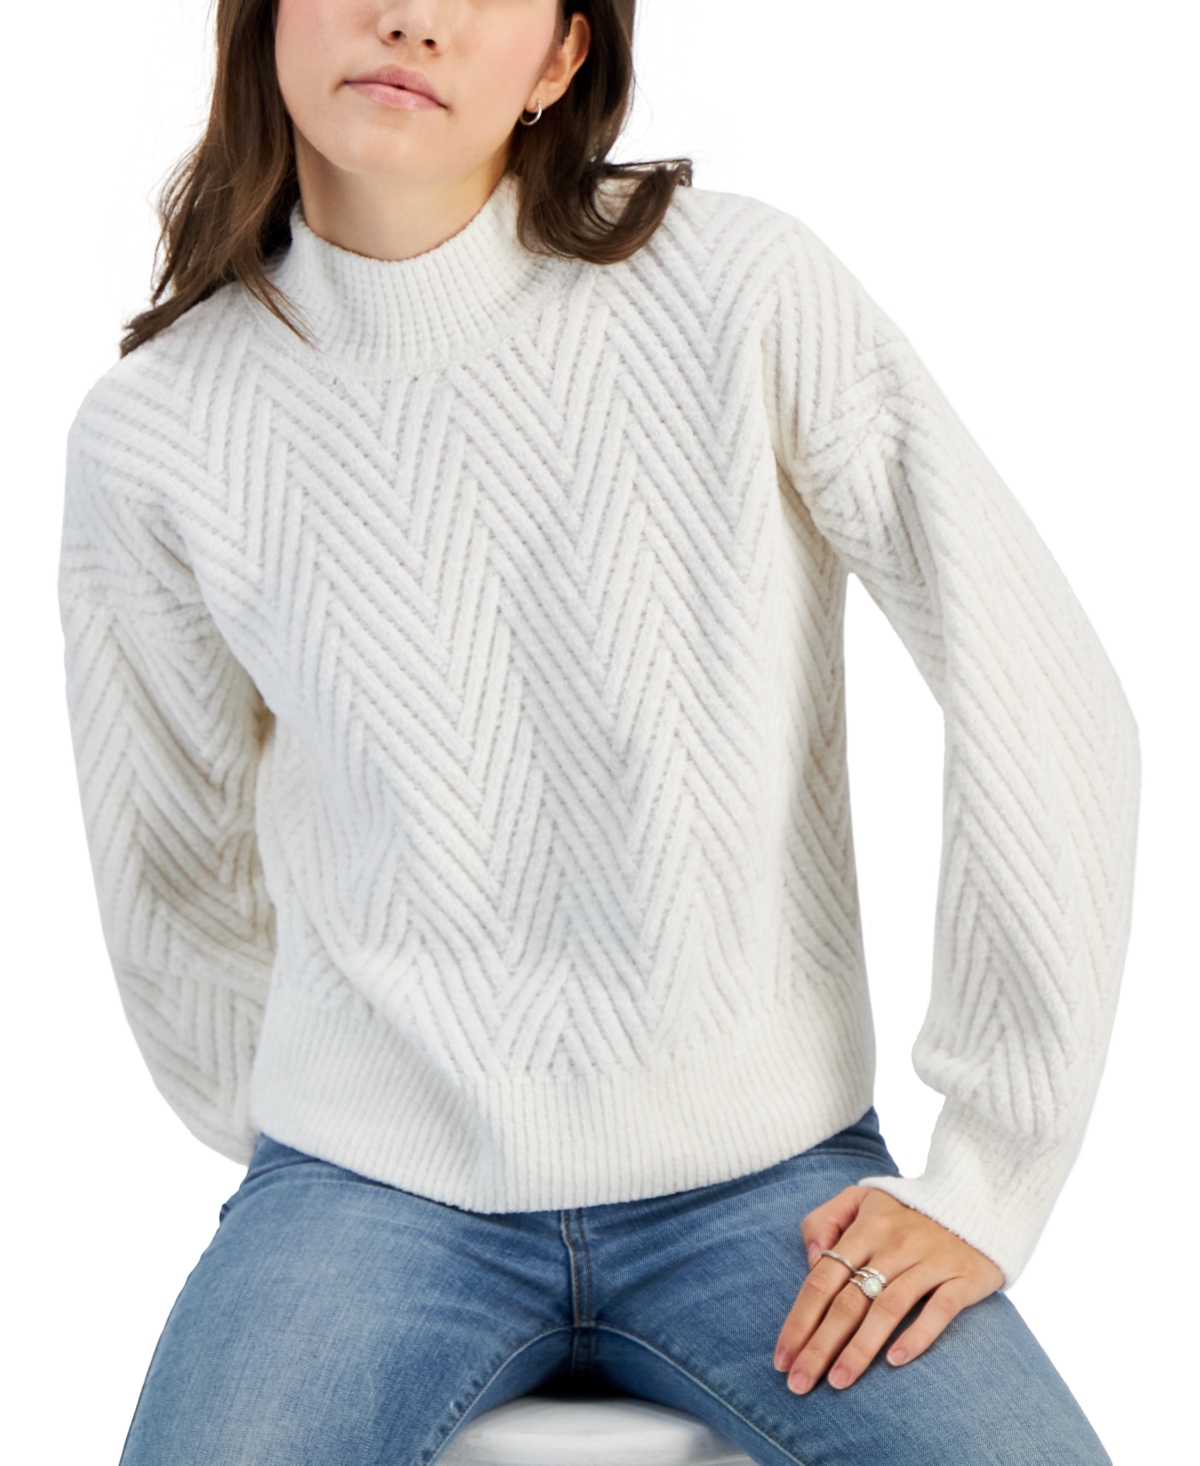 Juniors' Mock-Neck Long-Sleeve Chevron Sweater - Blizzard White